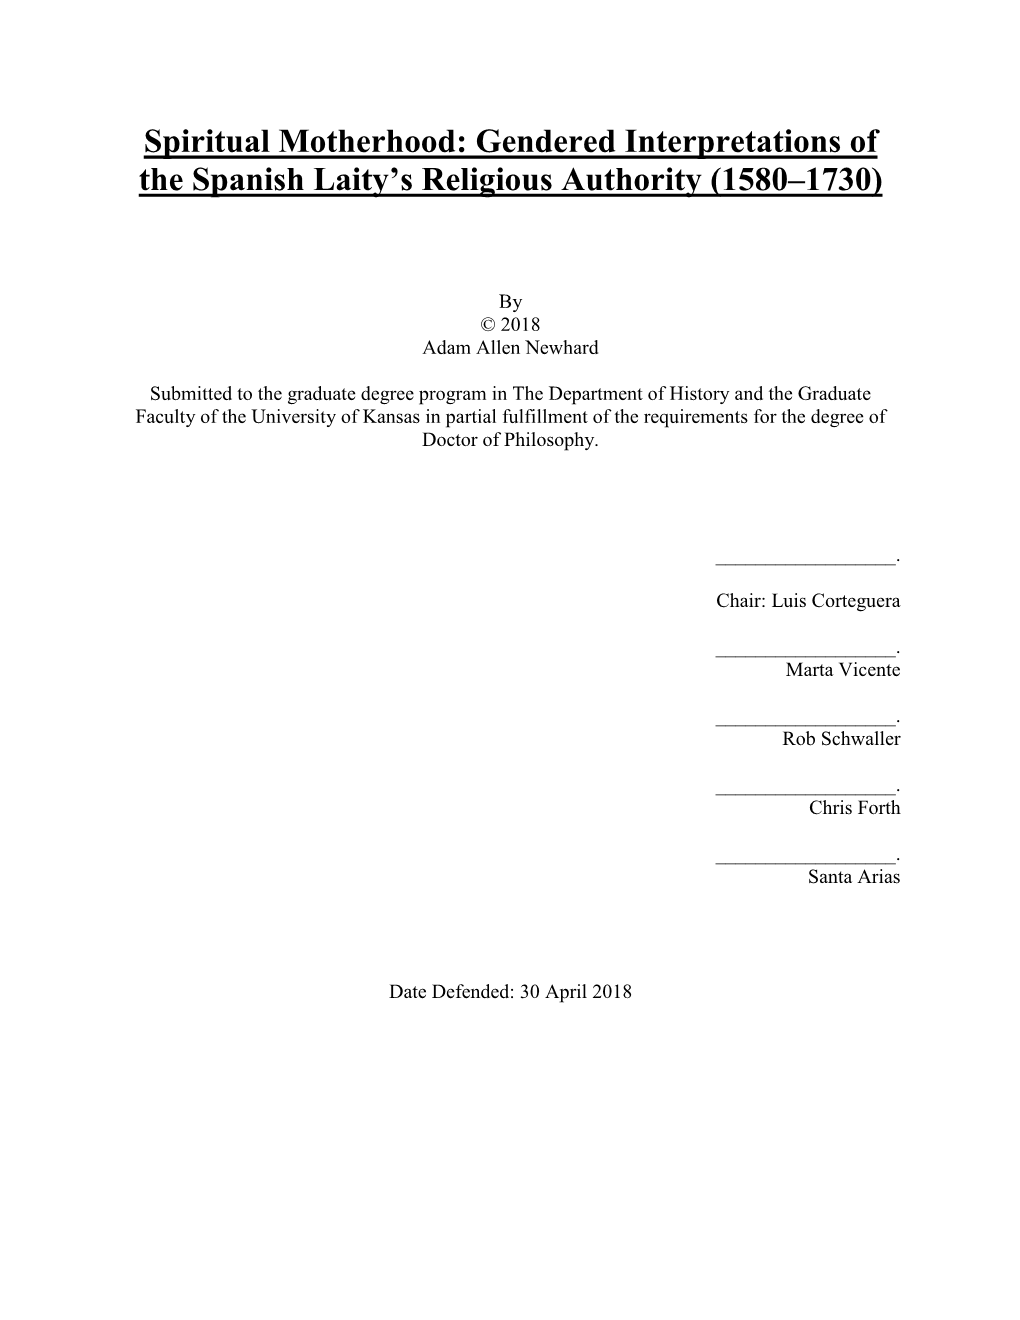 Gendered Interpretations of the Spanish Laity's